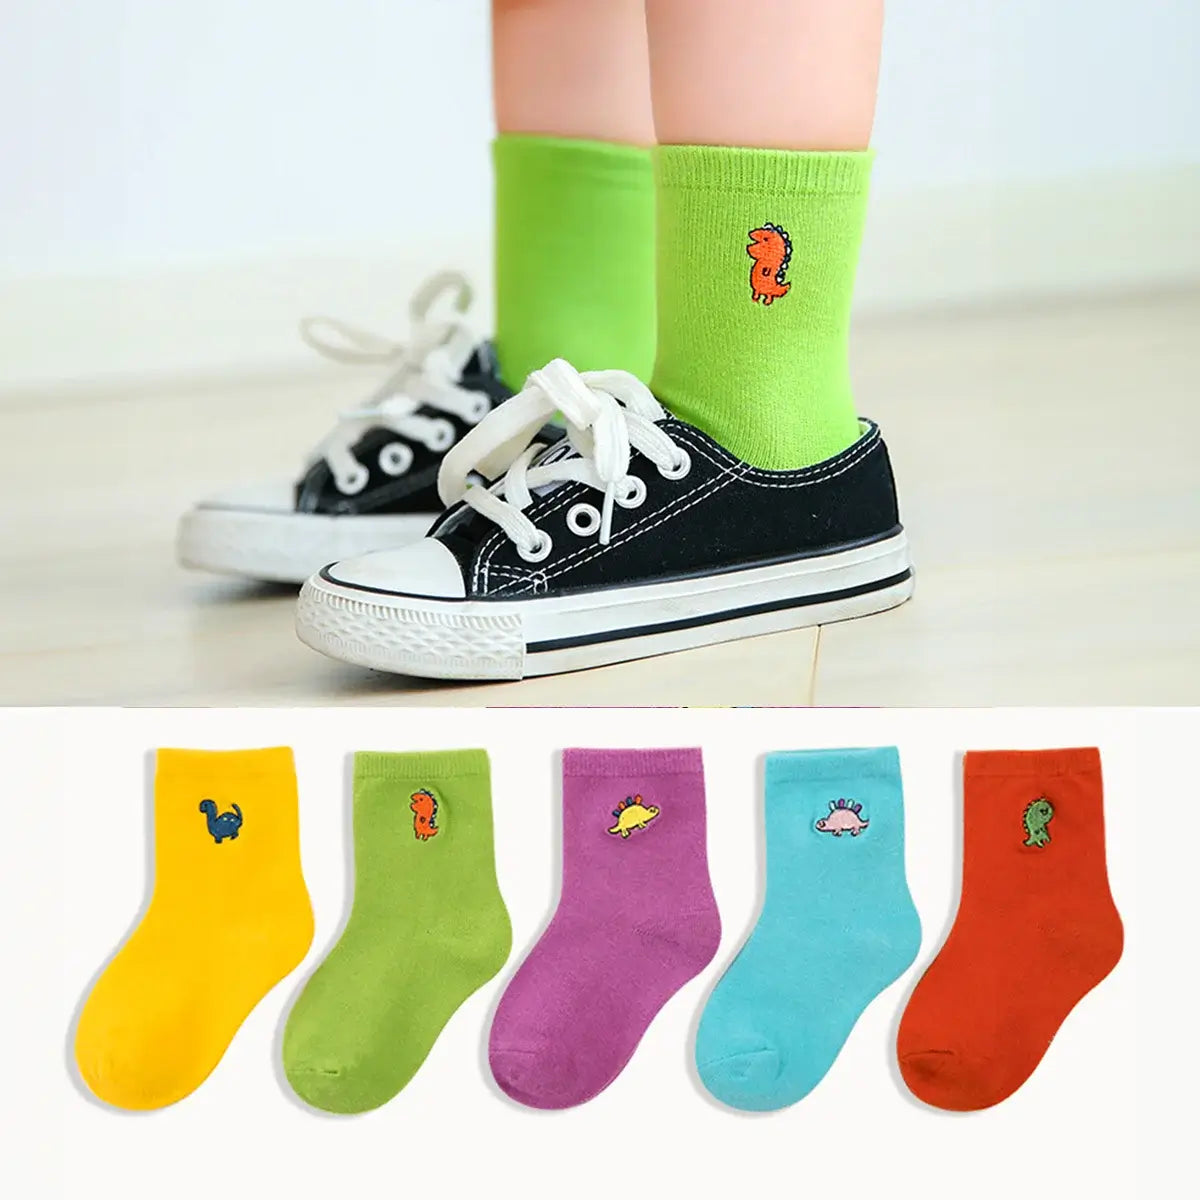 Titesocken | Lange – (5er-Pack) Dino-Socken Titeschaussettes Kinder für